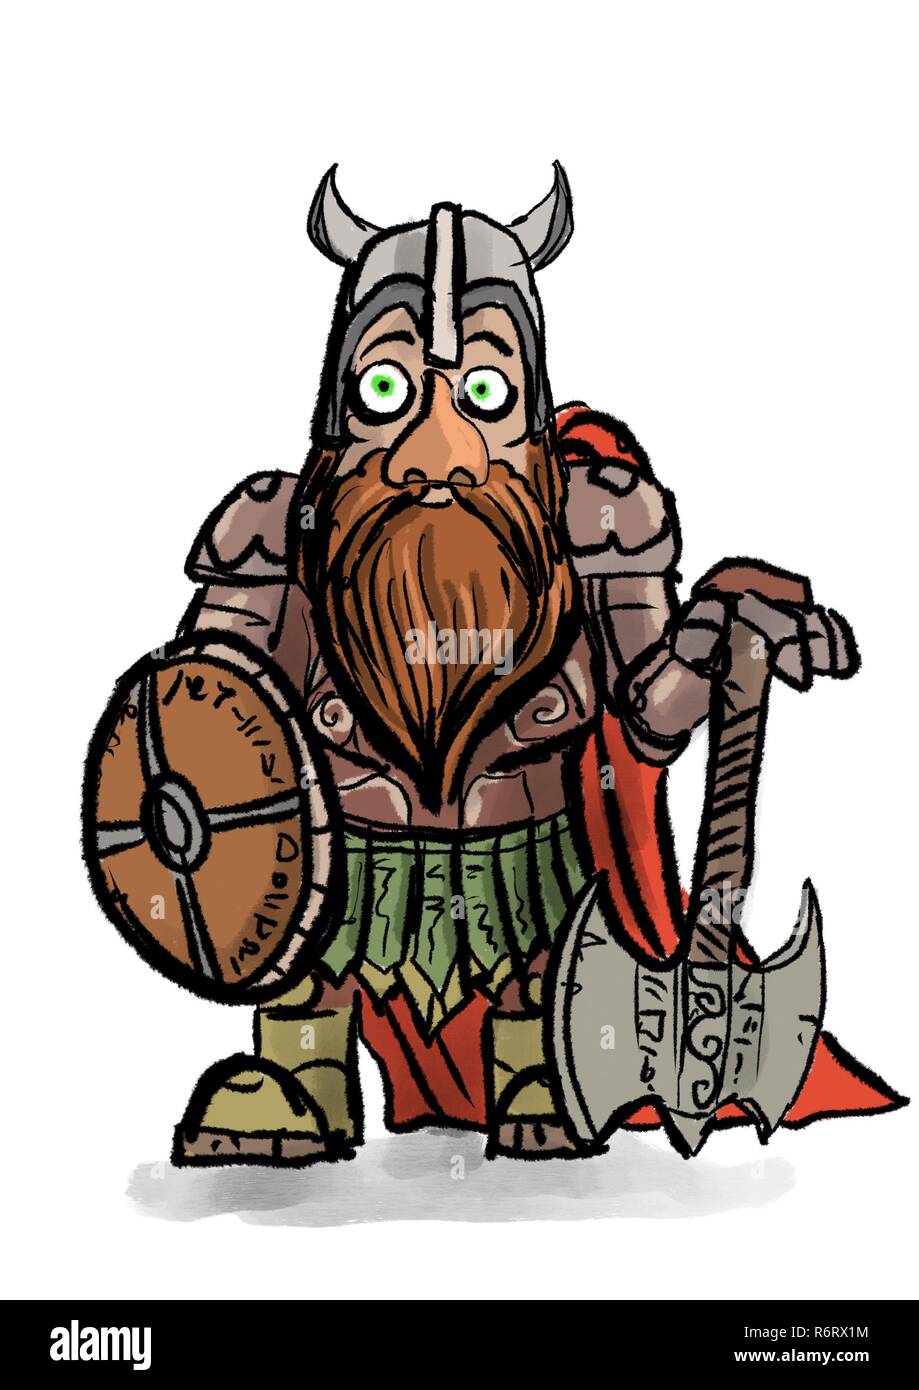 a fantasy dwarf mascot illustration Stock Photo